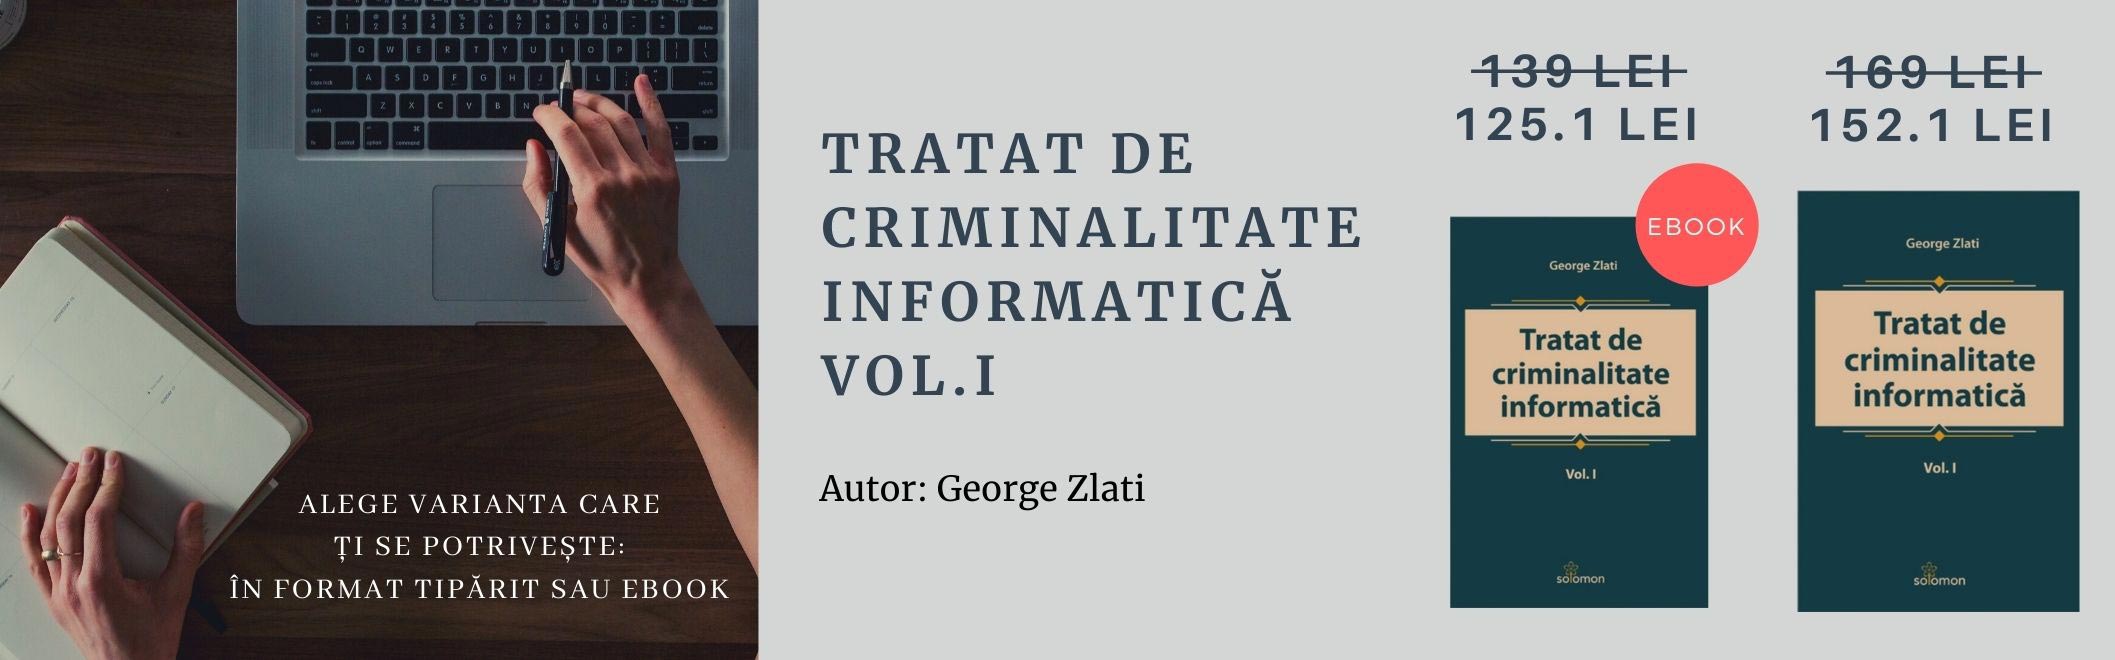 banner ebook zlati tratat criminalitate informatica - editura solomon